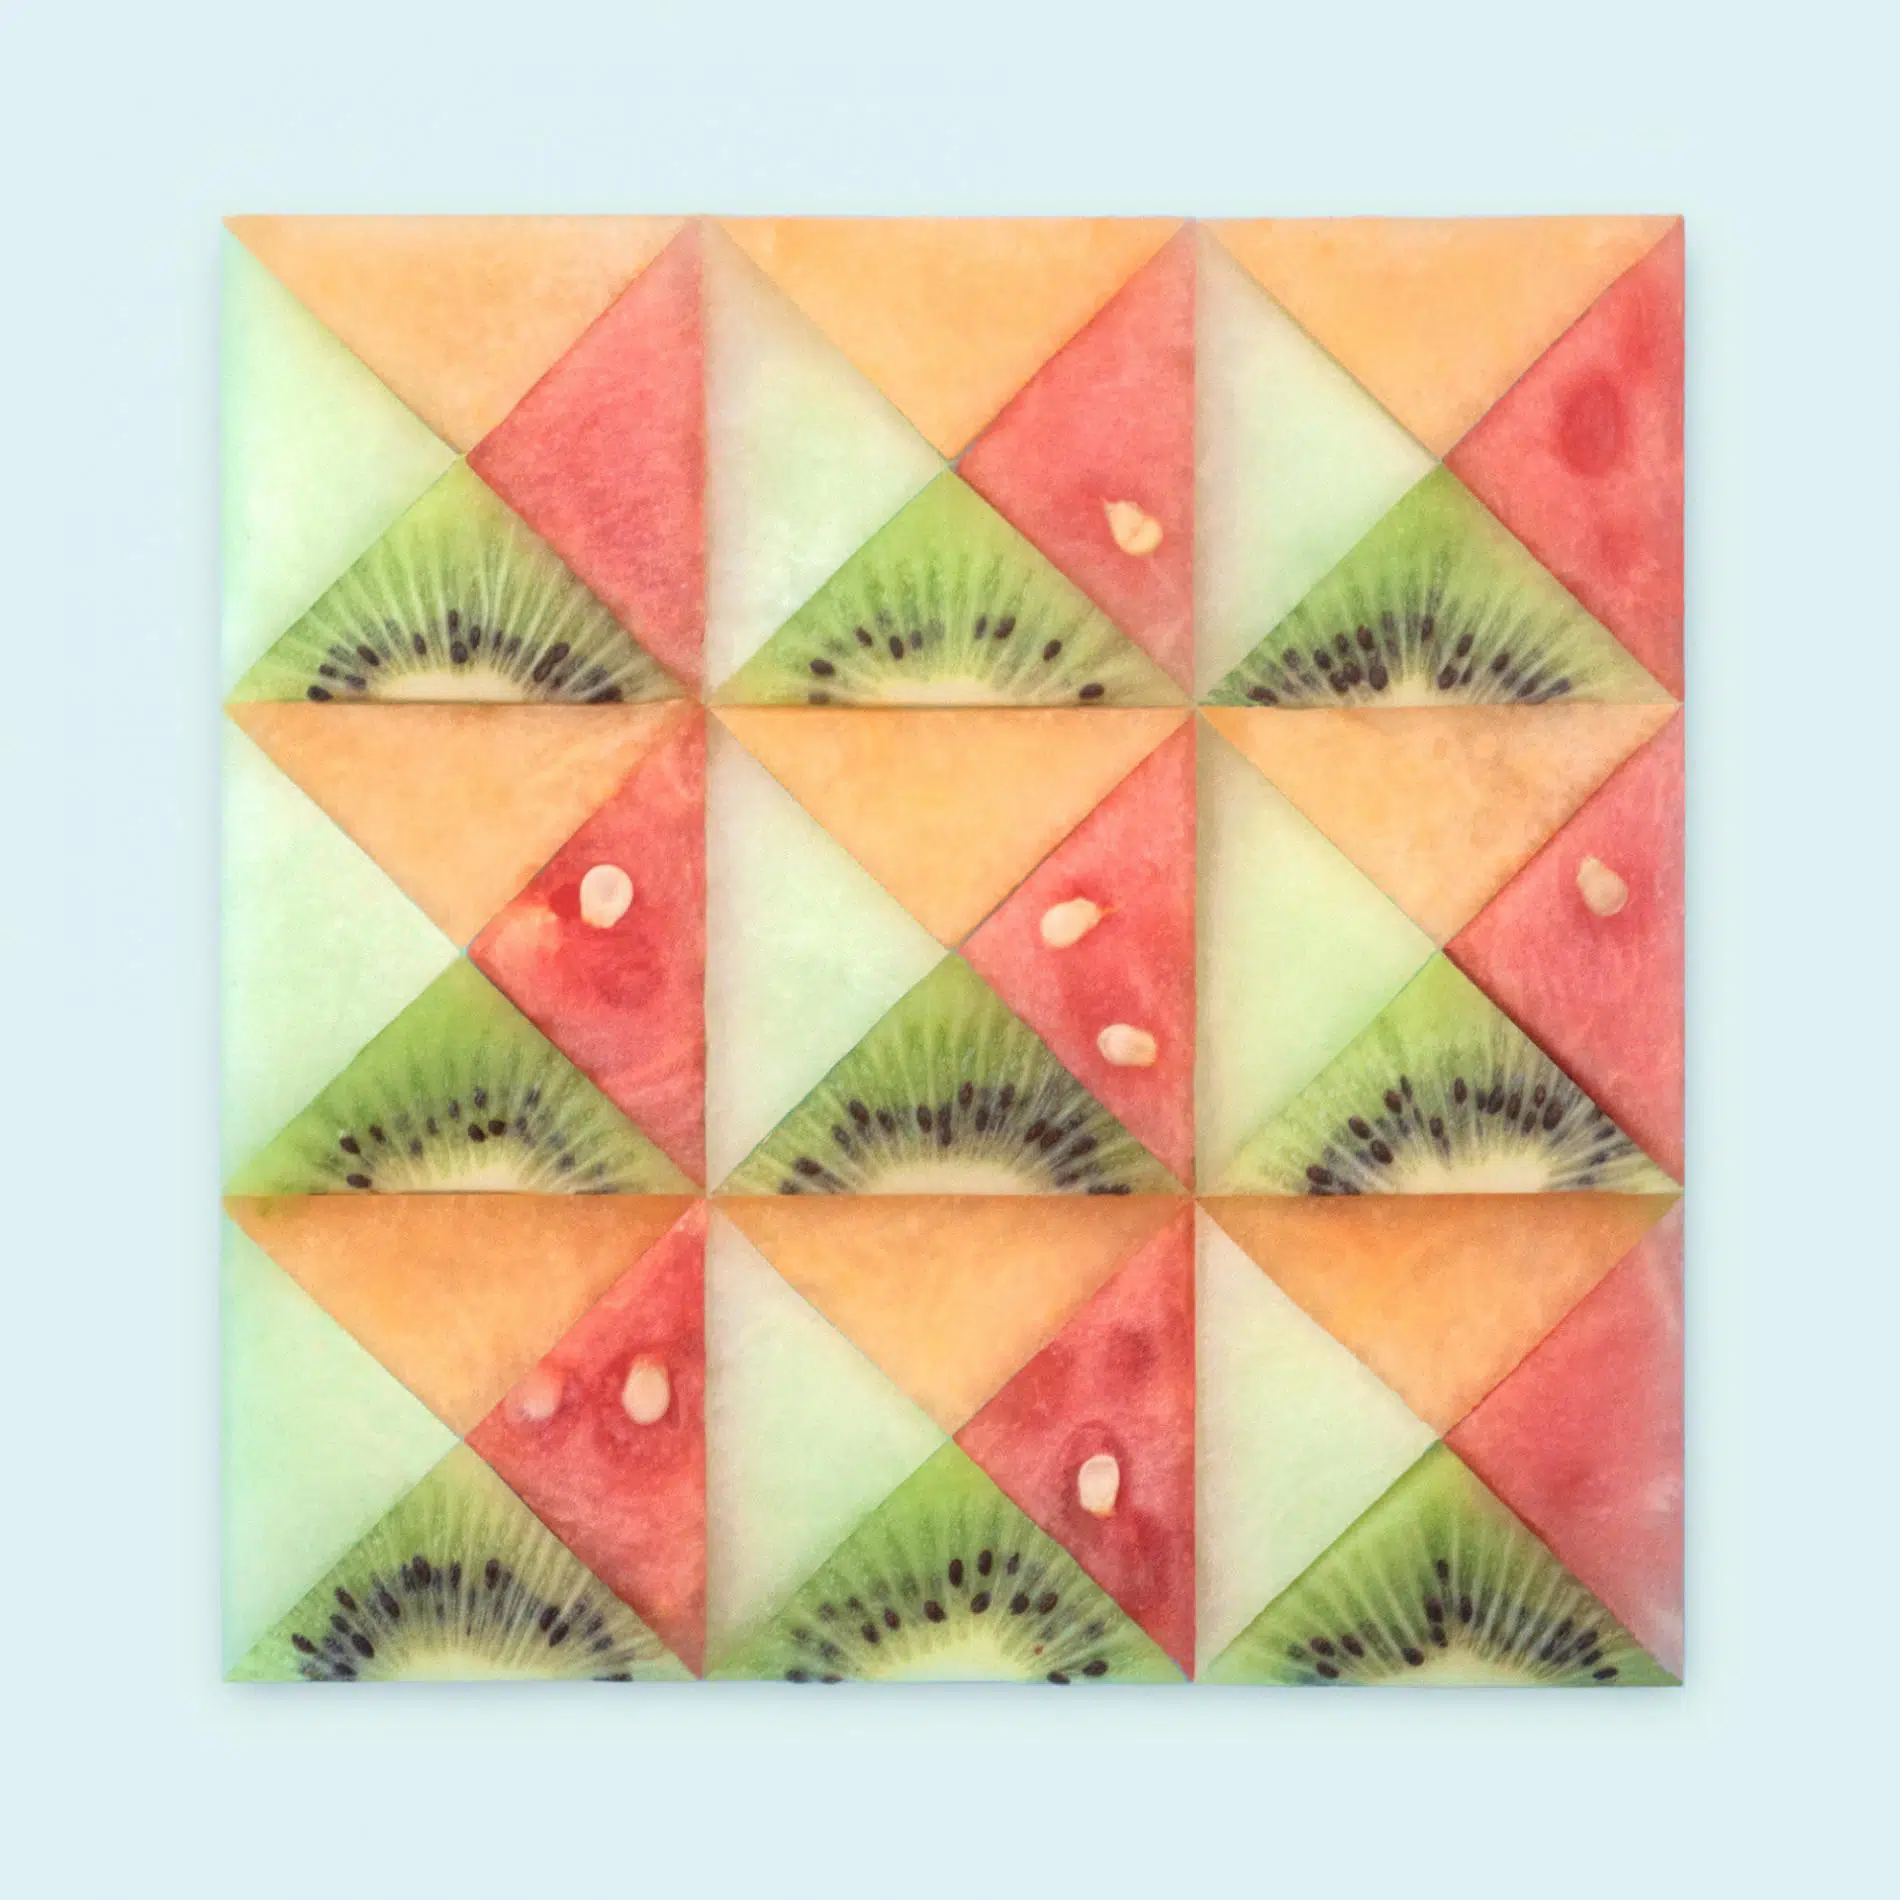 kristen meyers flat lays diseños geometricos con fruras, sandia, melon y kiwi